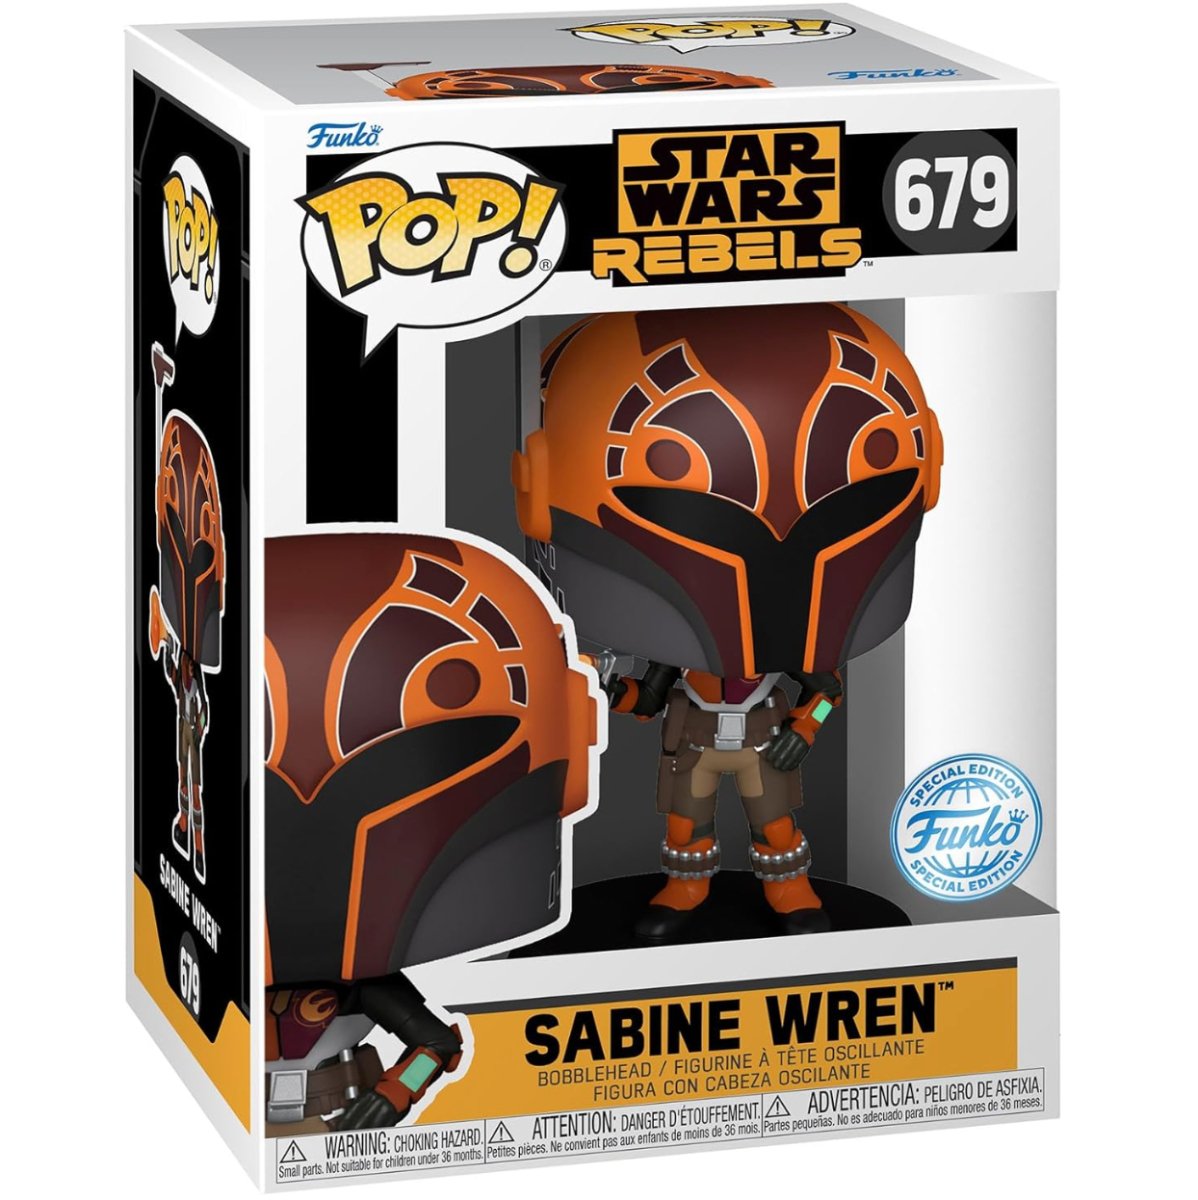 Star Wars - Sabine Wren [Rebels] (Metallic Special Edition) #679 - Funko Pop! Vinyl Star Wars - Persona Toys